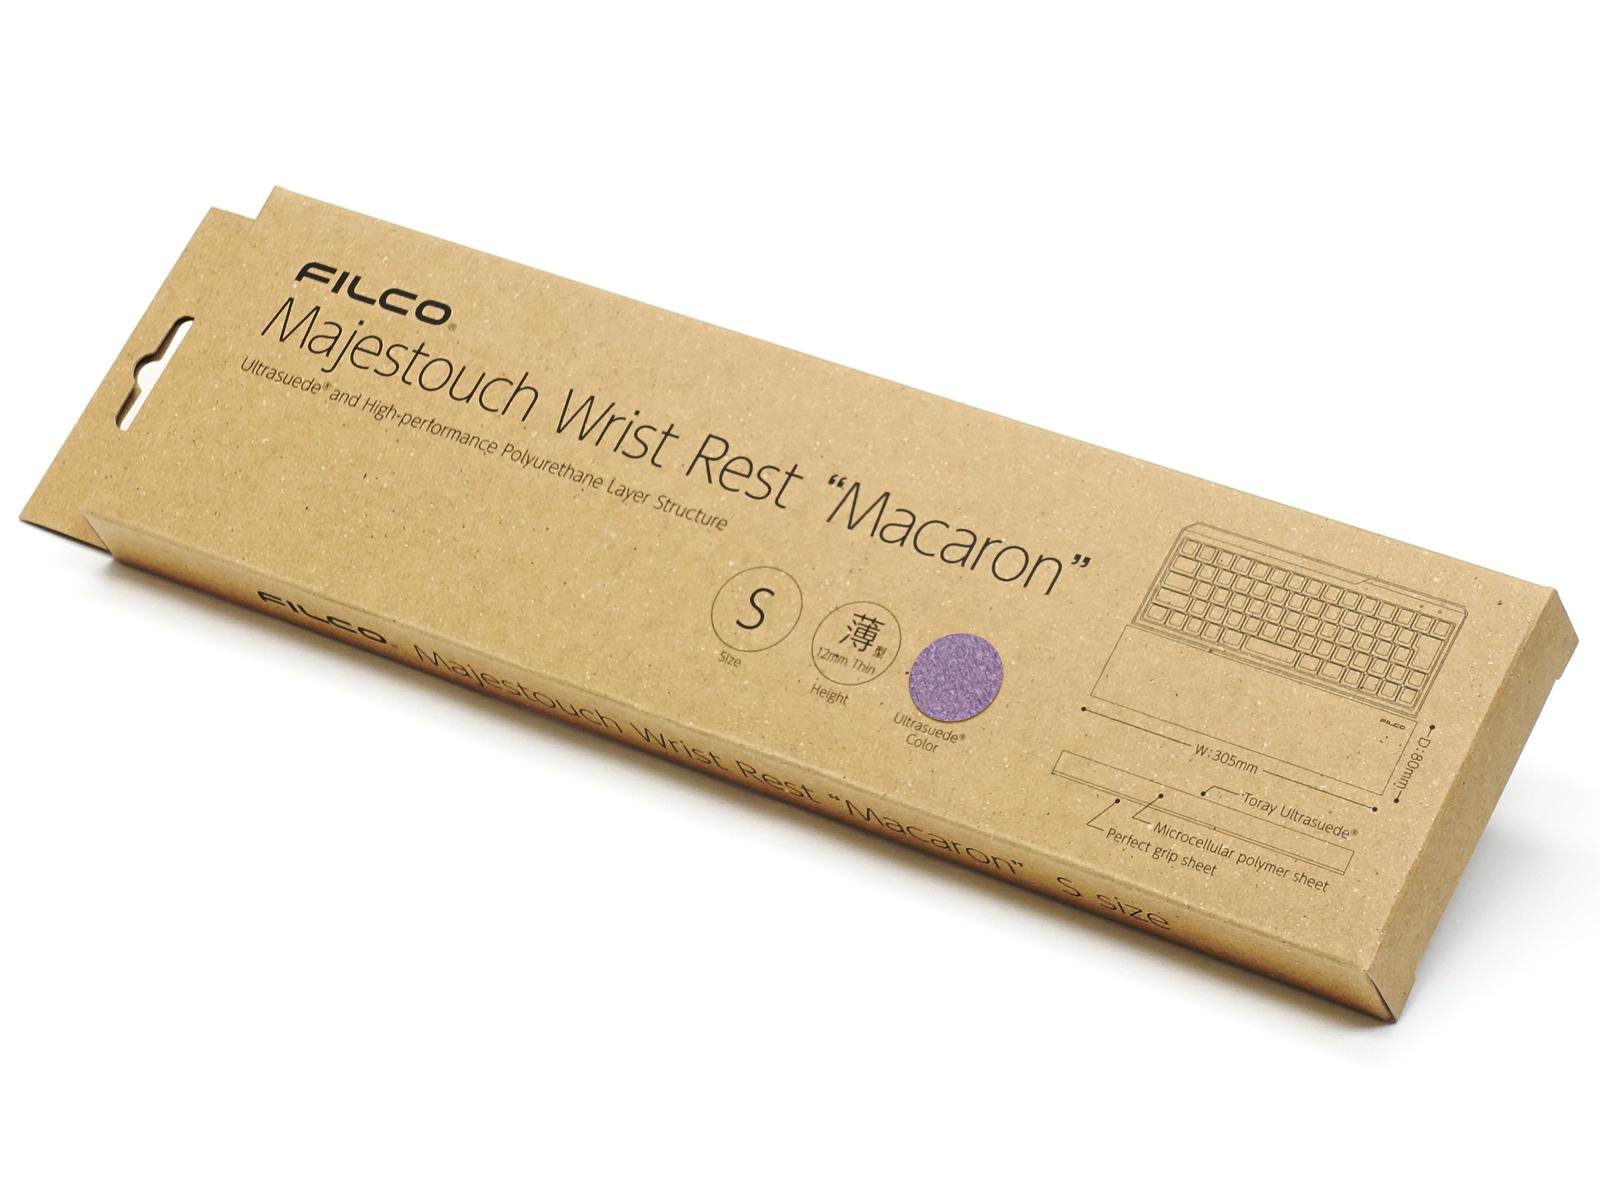 FILCO Majestouch Macaron Wrist Rest Lavender Small (12mm) MKQEKVAWN0 |38221|